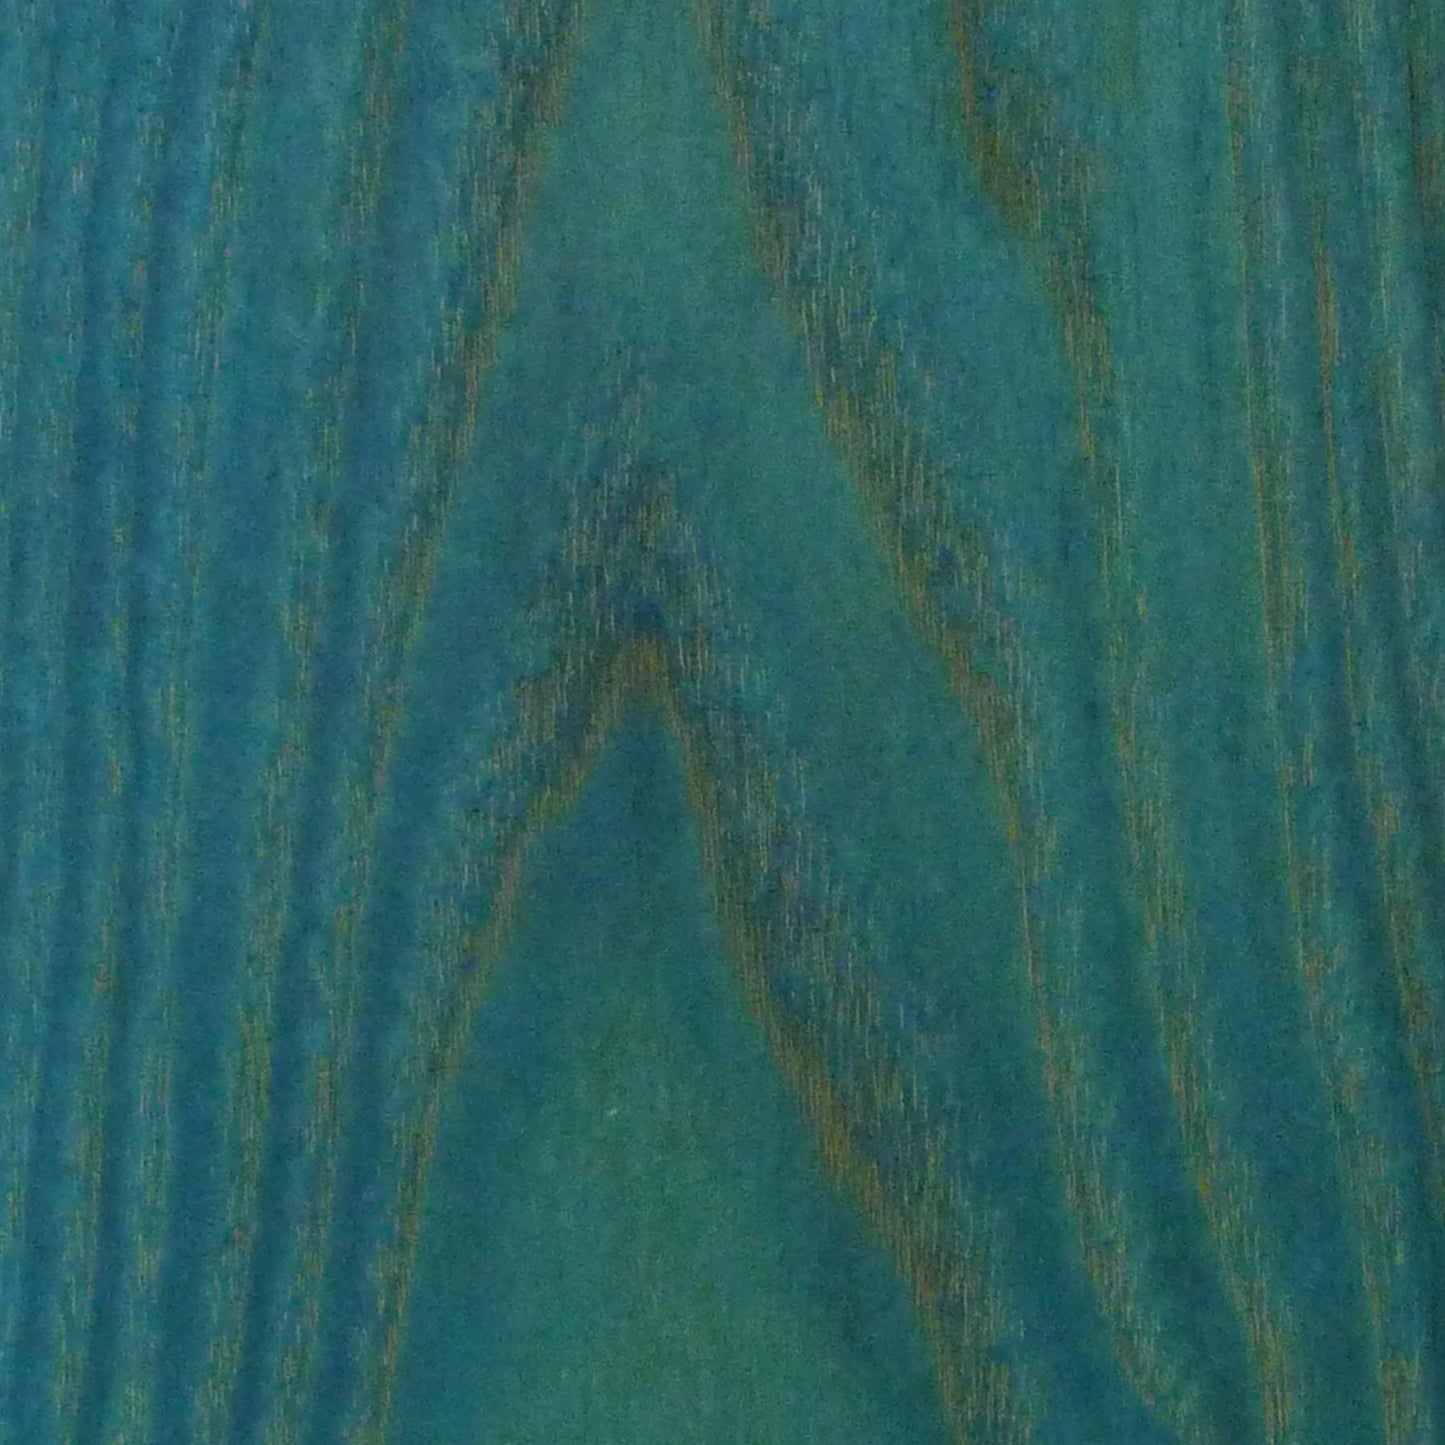 dartfords Blue Interior Water Based Wood Dye - 1 litre Tin